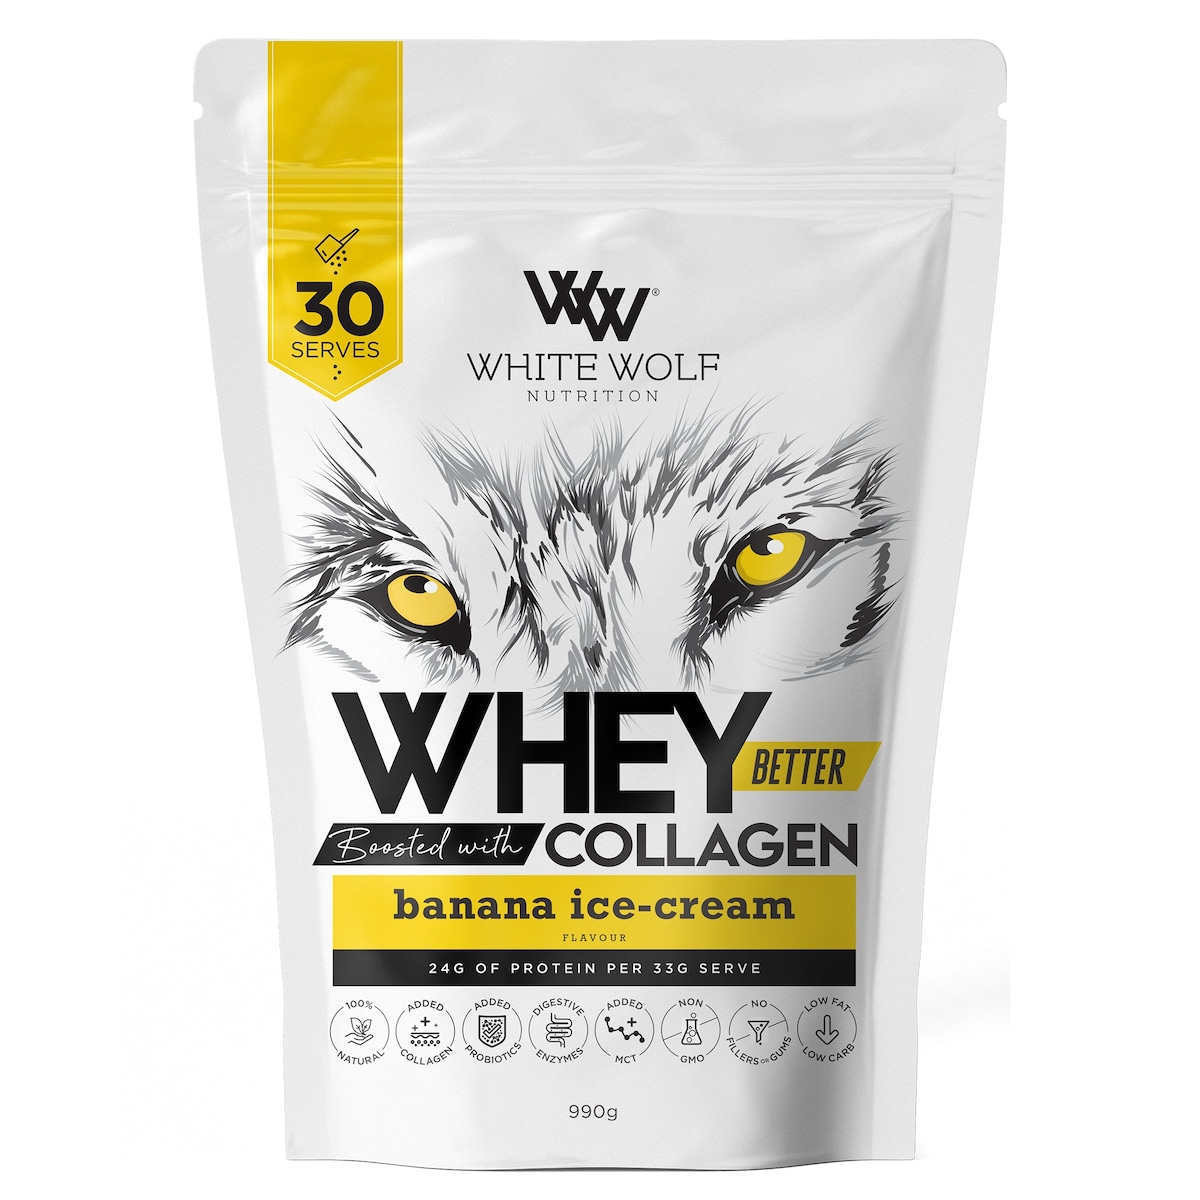 White Wolf Nutrition Whey Better Protein Banana Ice Cream 990g